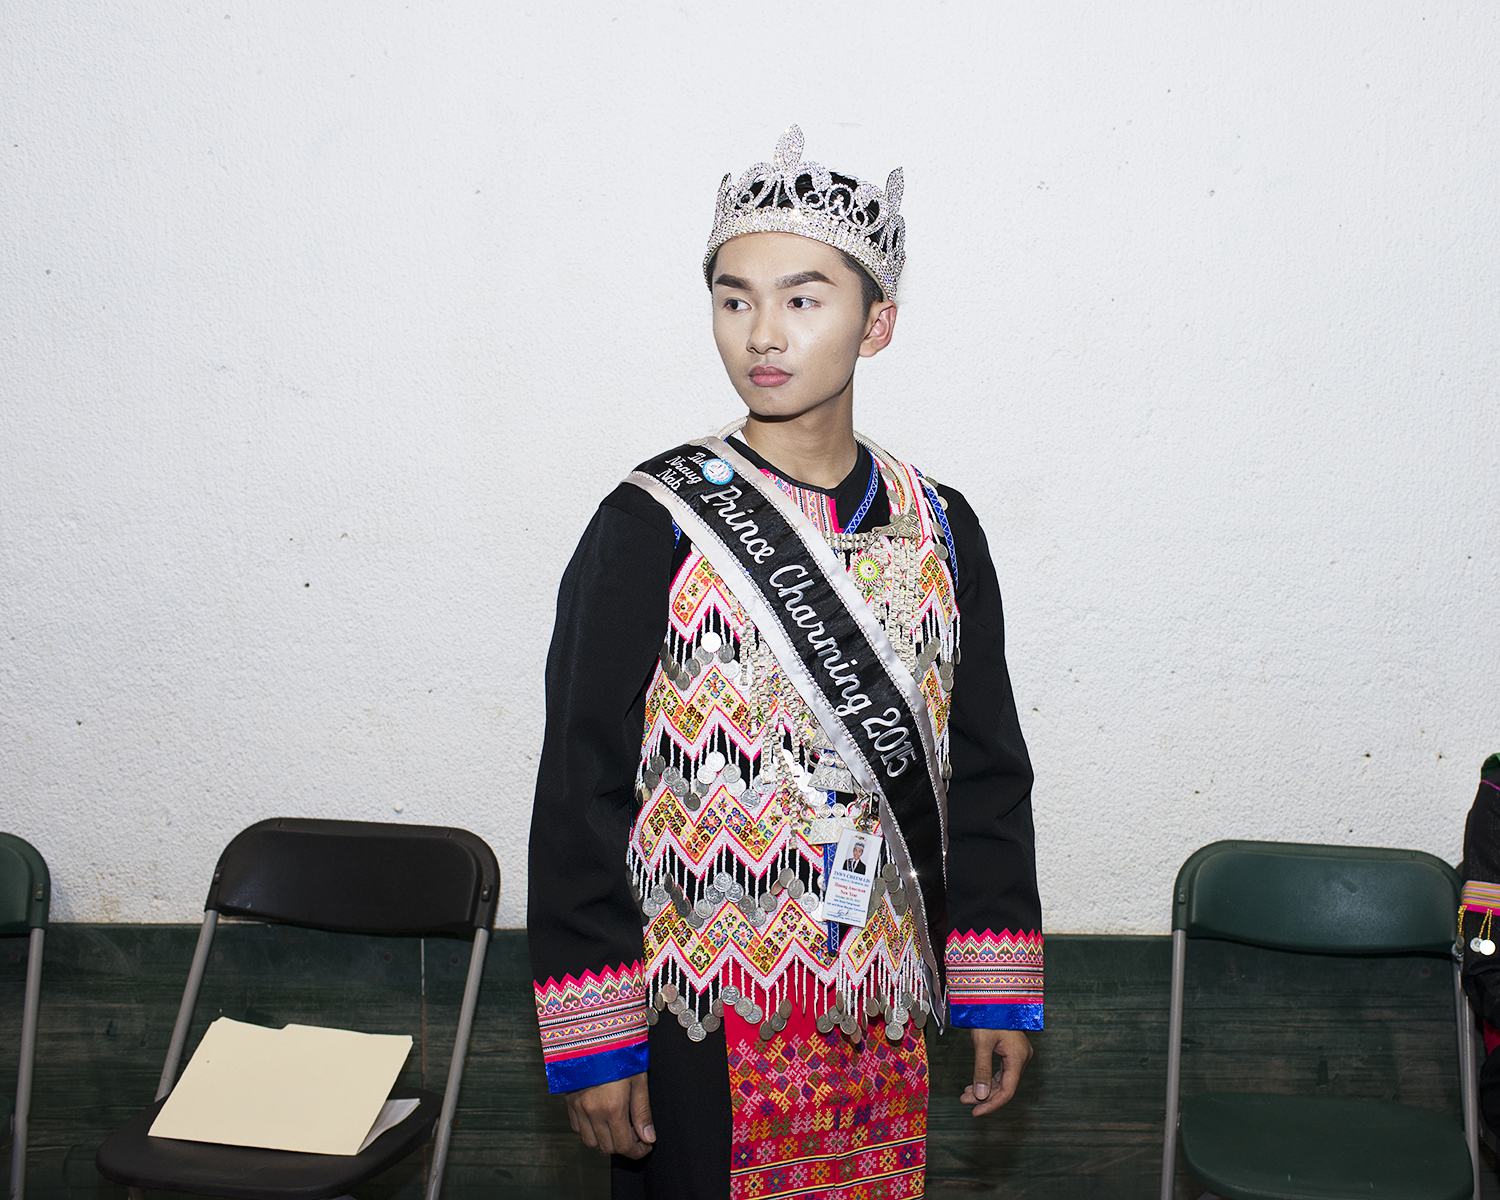 Pao Houa Her, Prince Charming 2015, digital archival inkjet print, 2015.